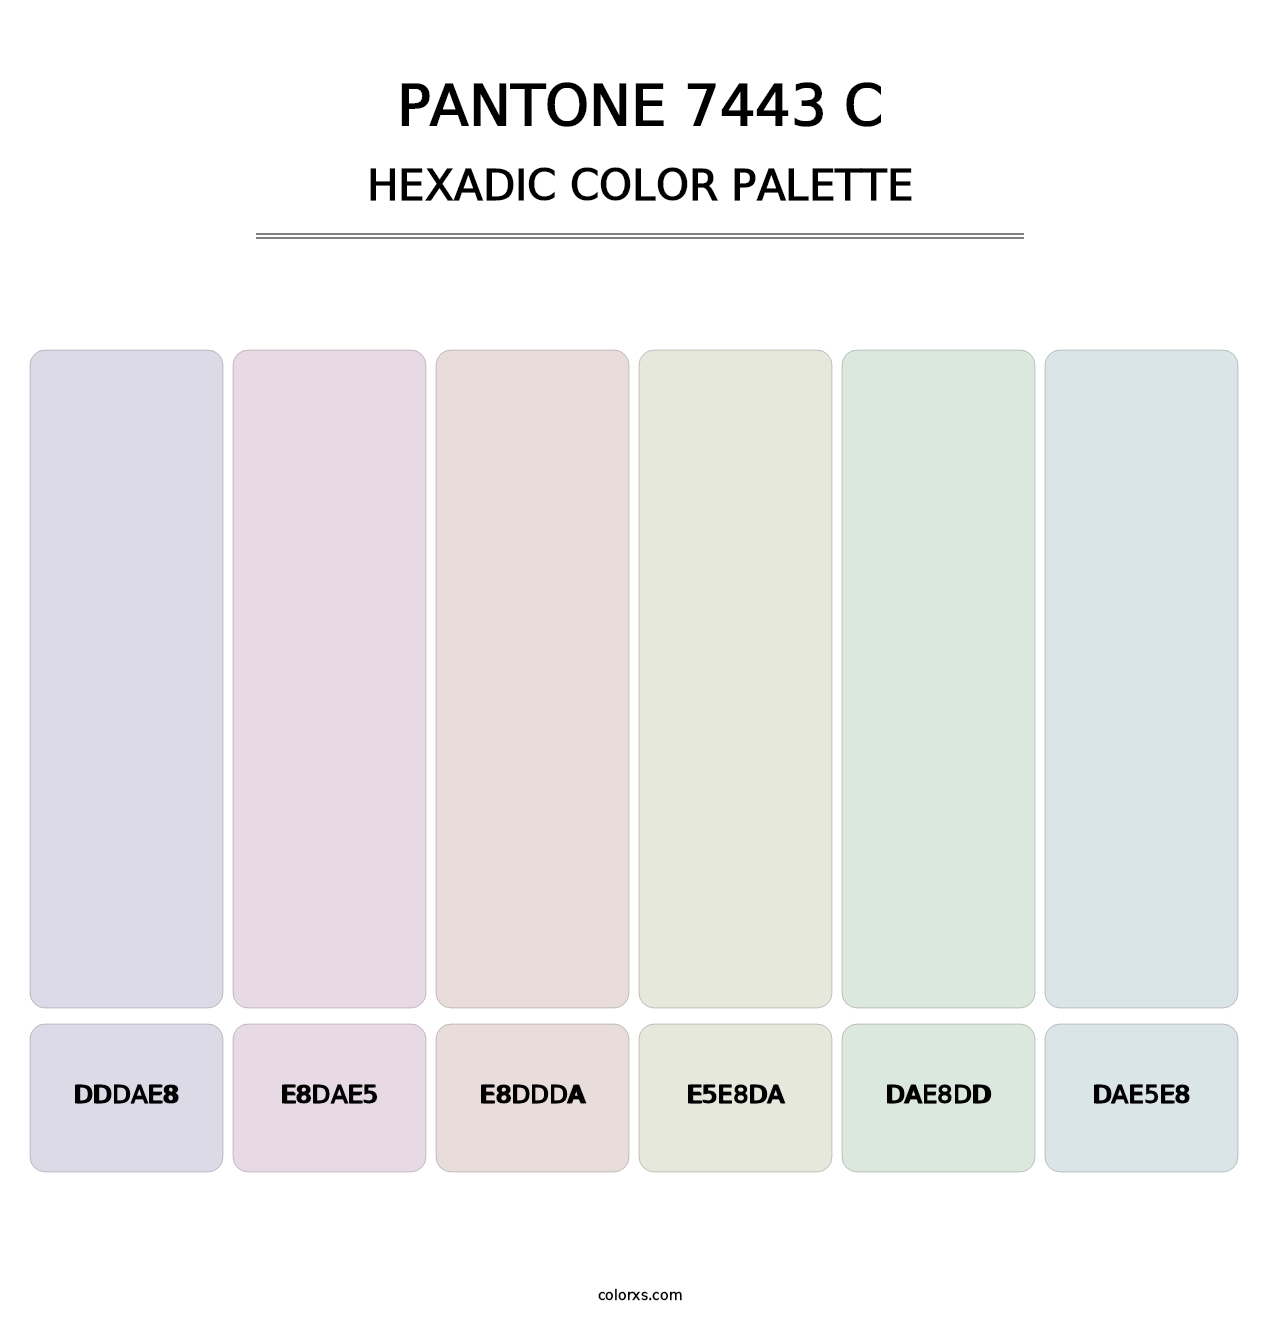 PANTONE 7443 C - Hexadic Color Palette